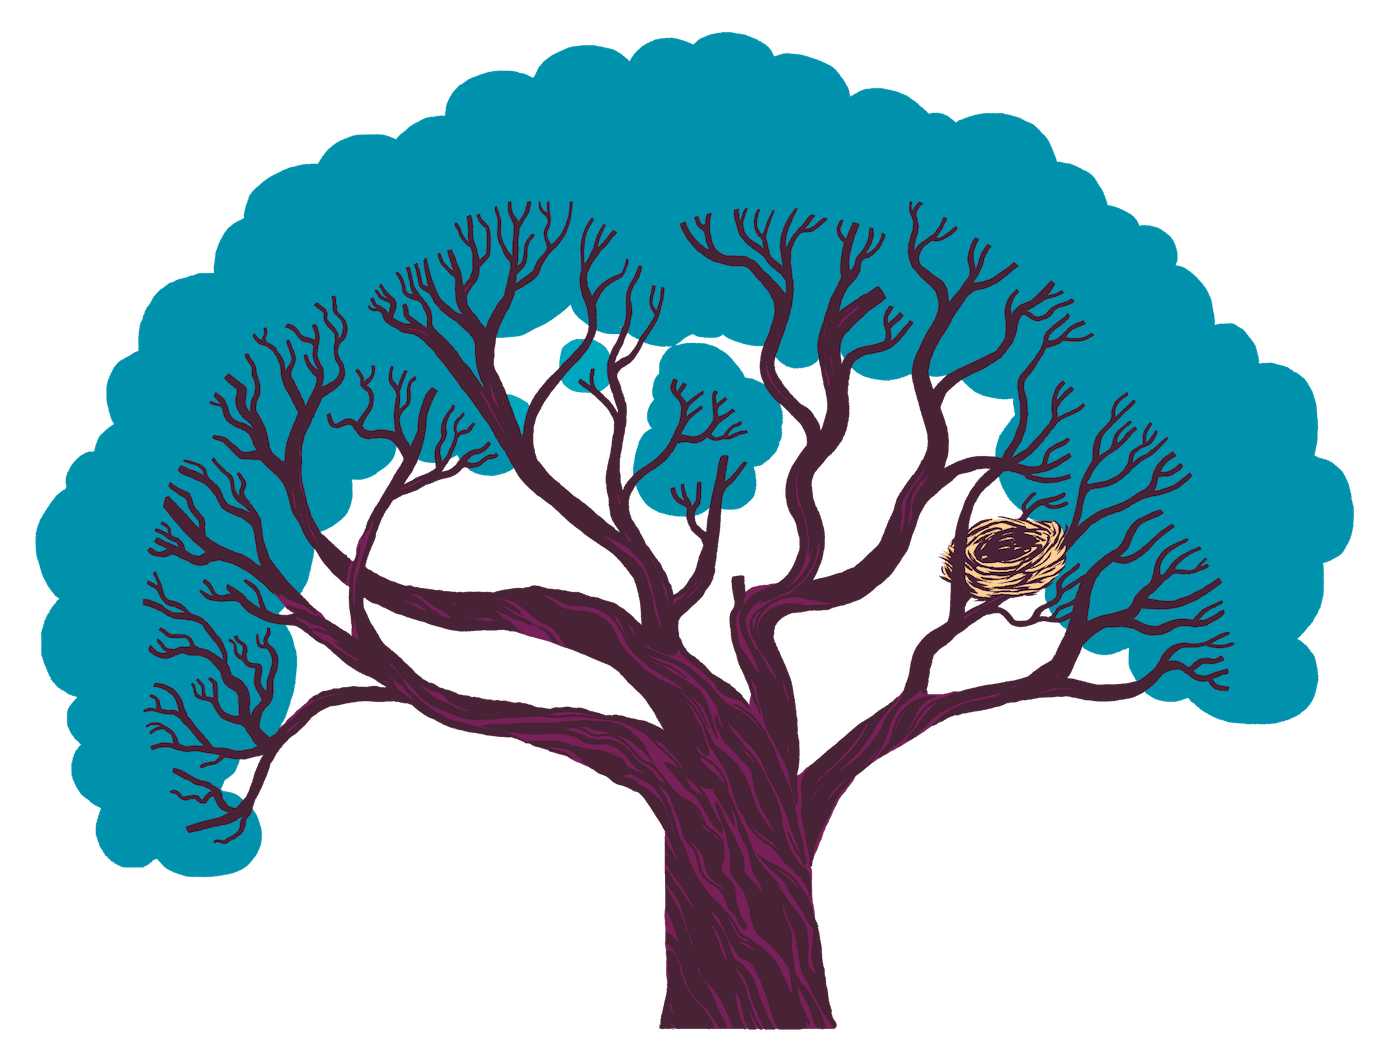 Illustration of a Tree